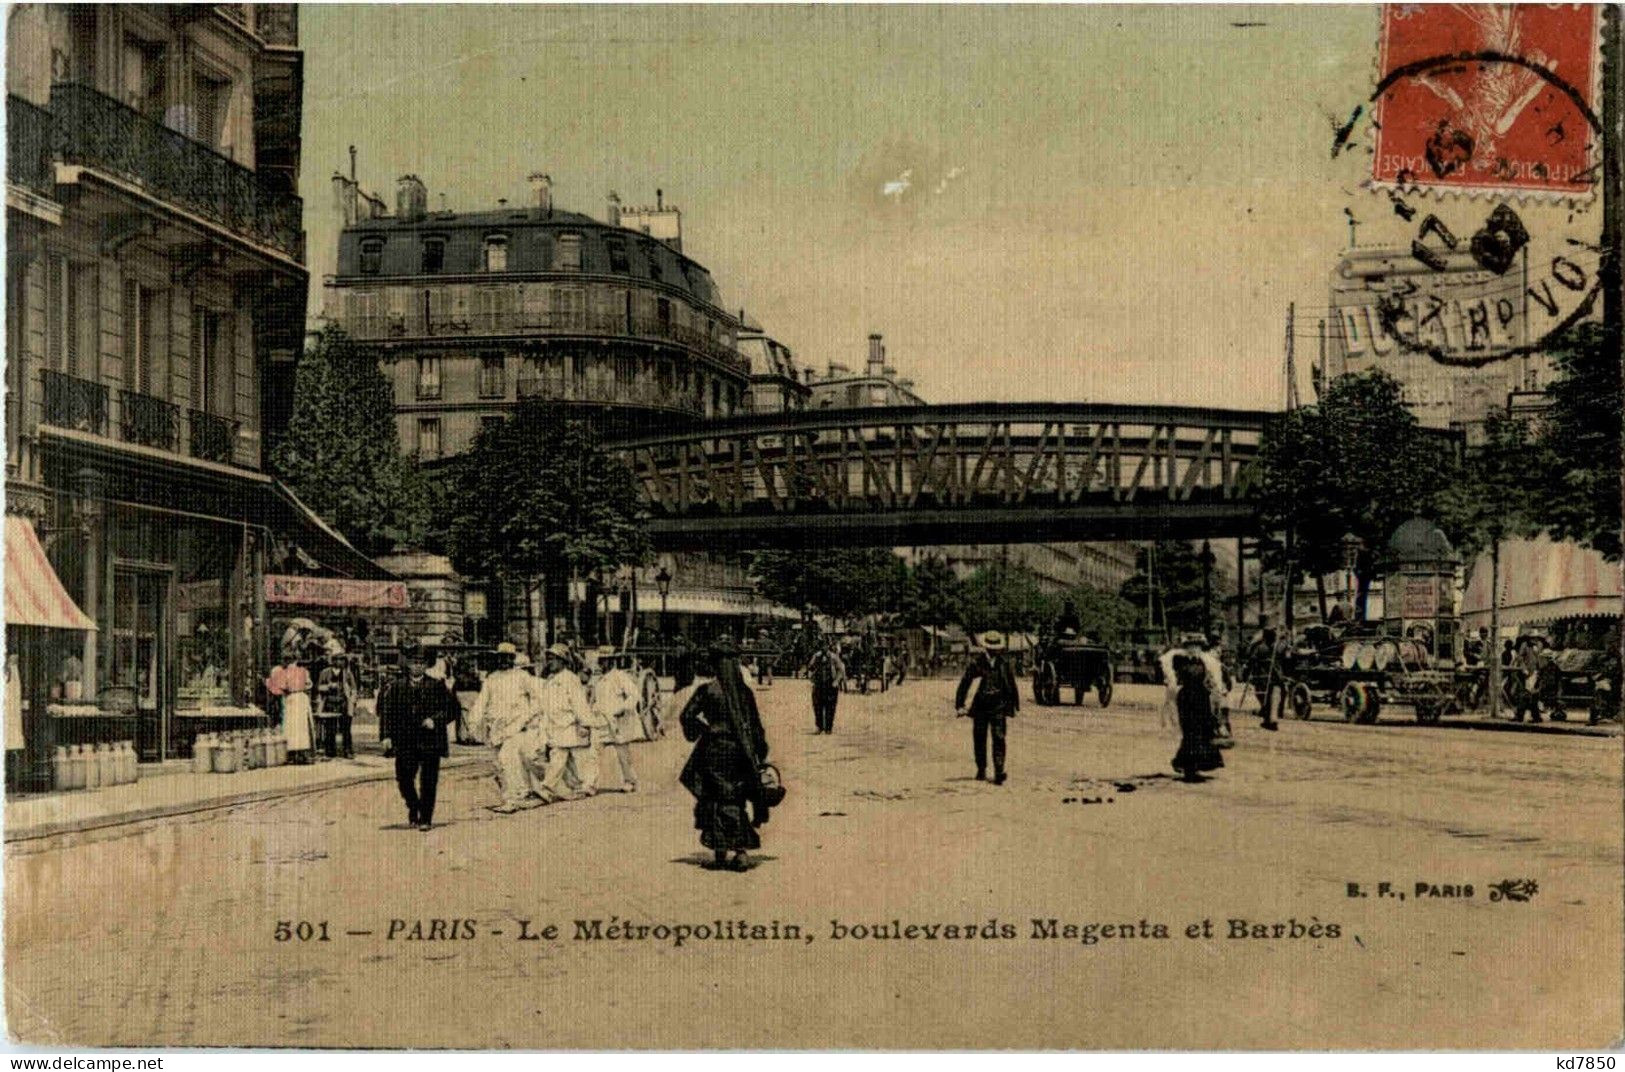 Paris - Metropolitain - Stations, Underground